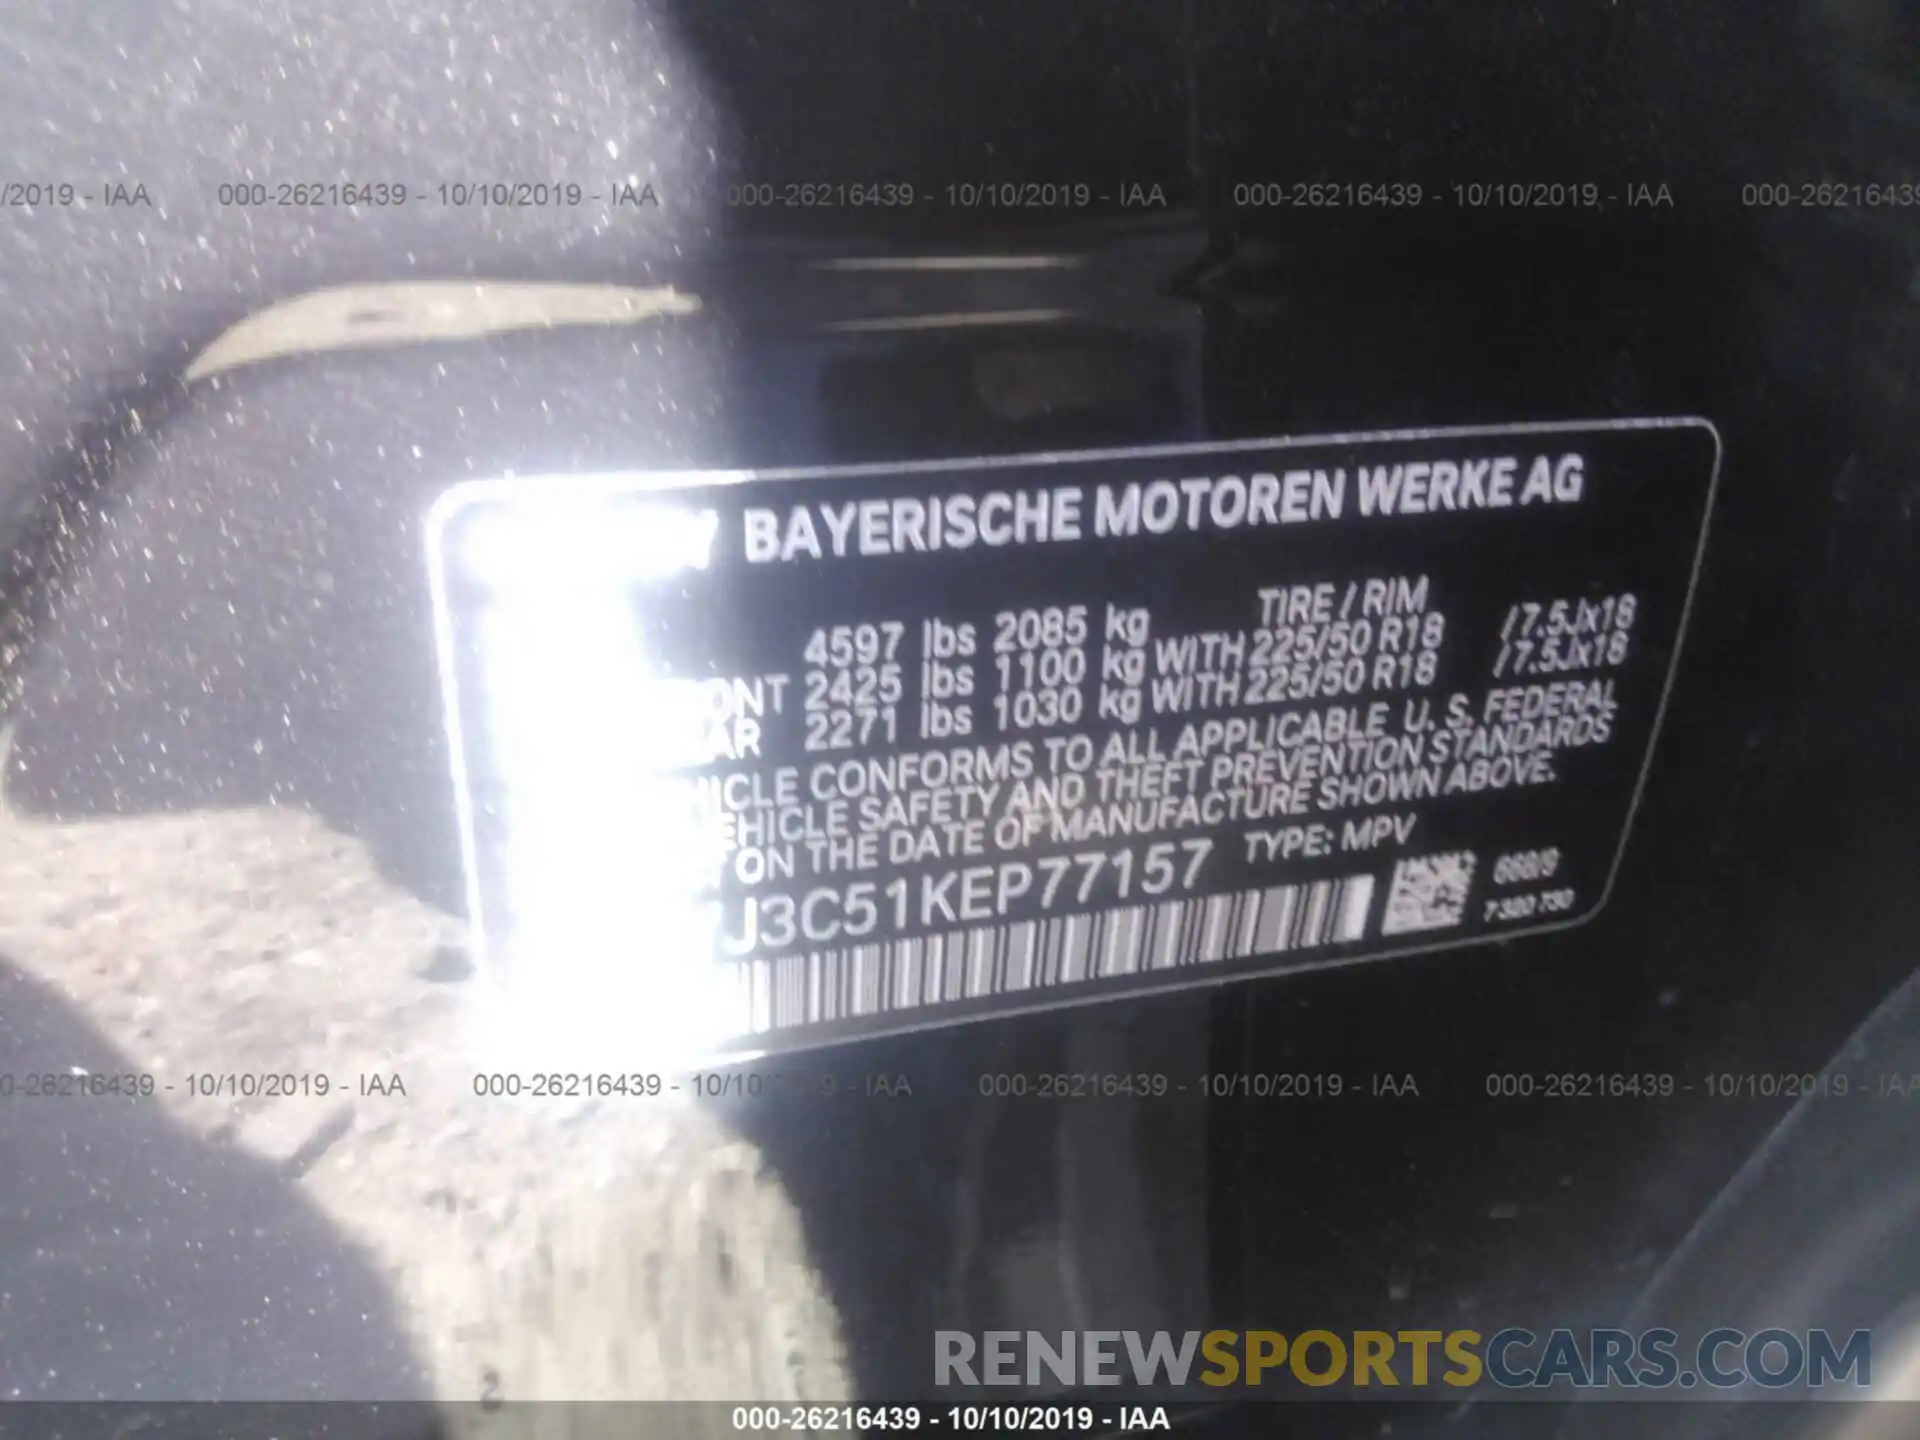 17 Photograph of a damaged car WBXYJ3C51KEP77157 BMW X2 2019